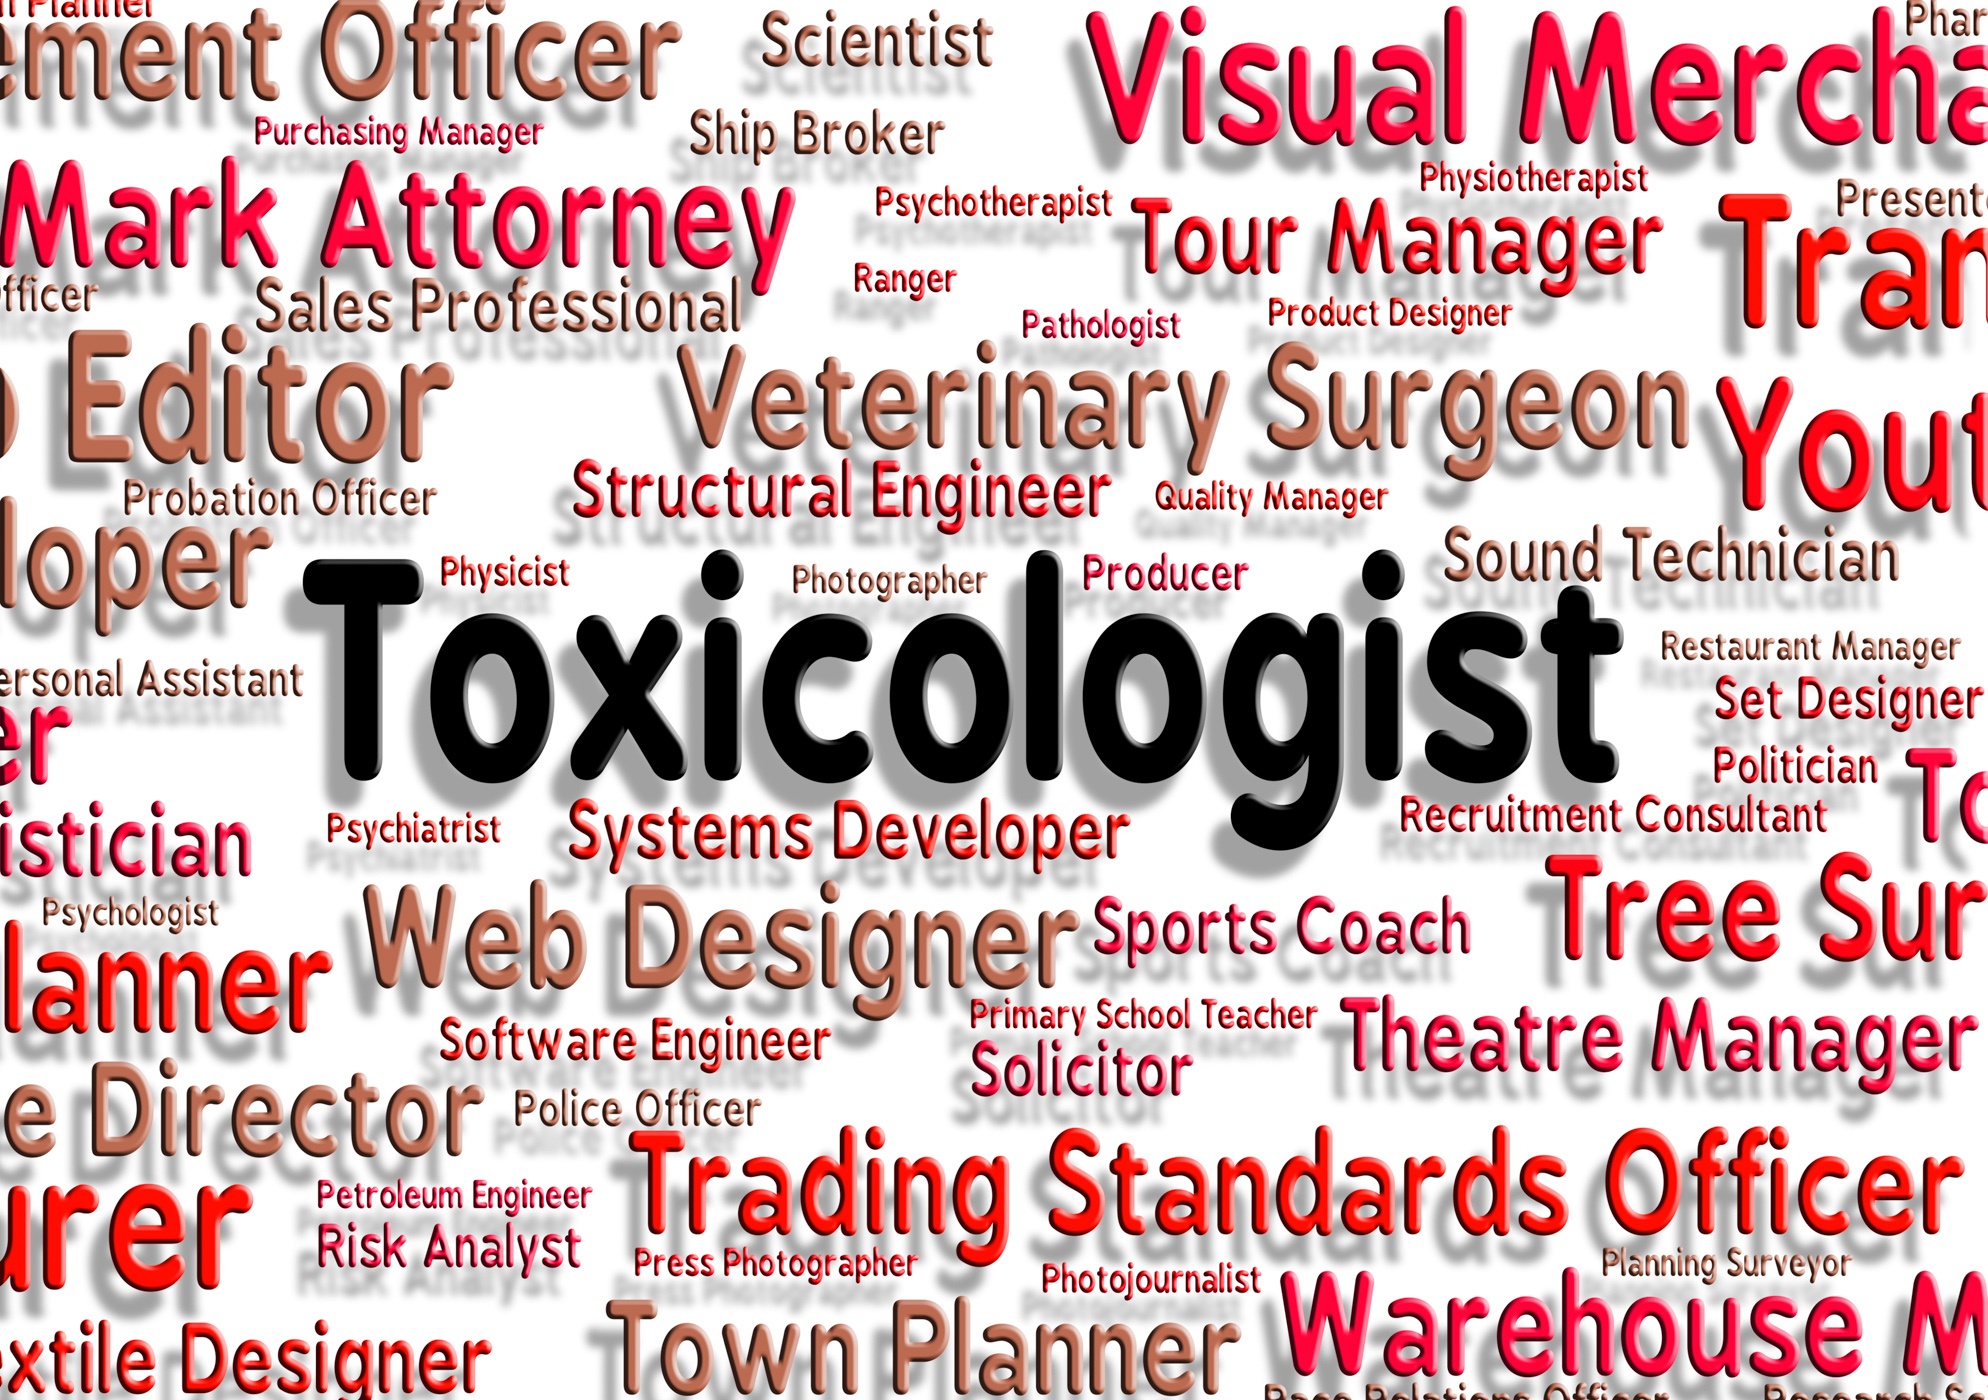 Toxicologist job represents hiring text and employment photo